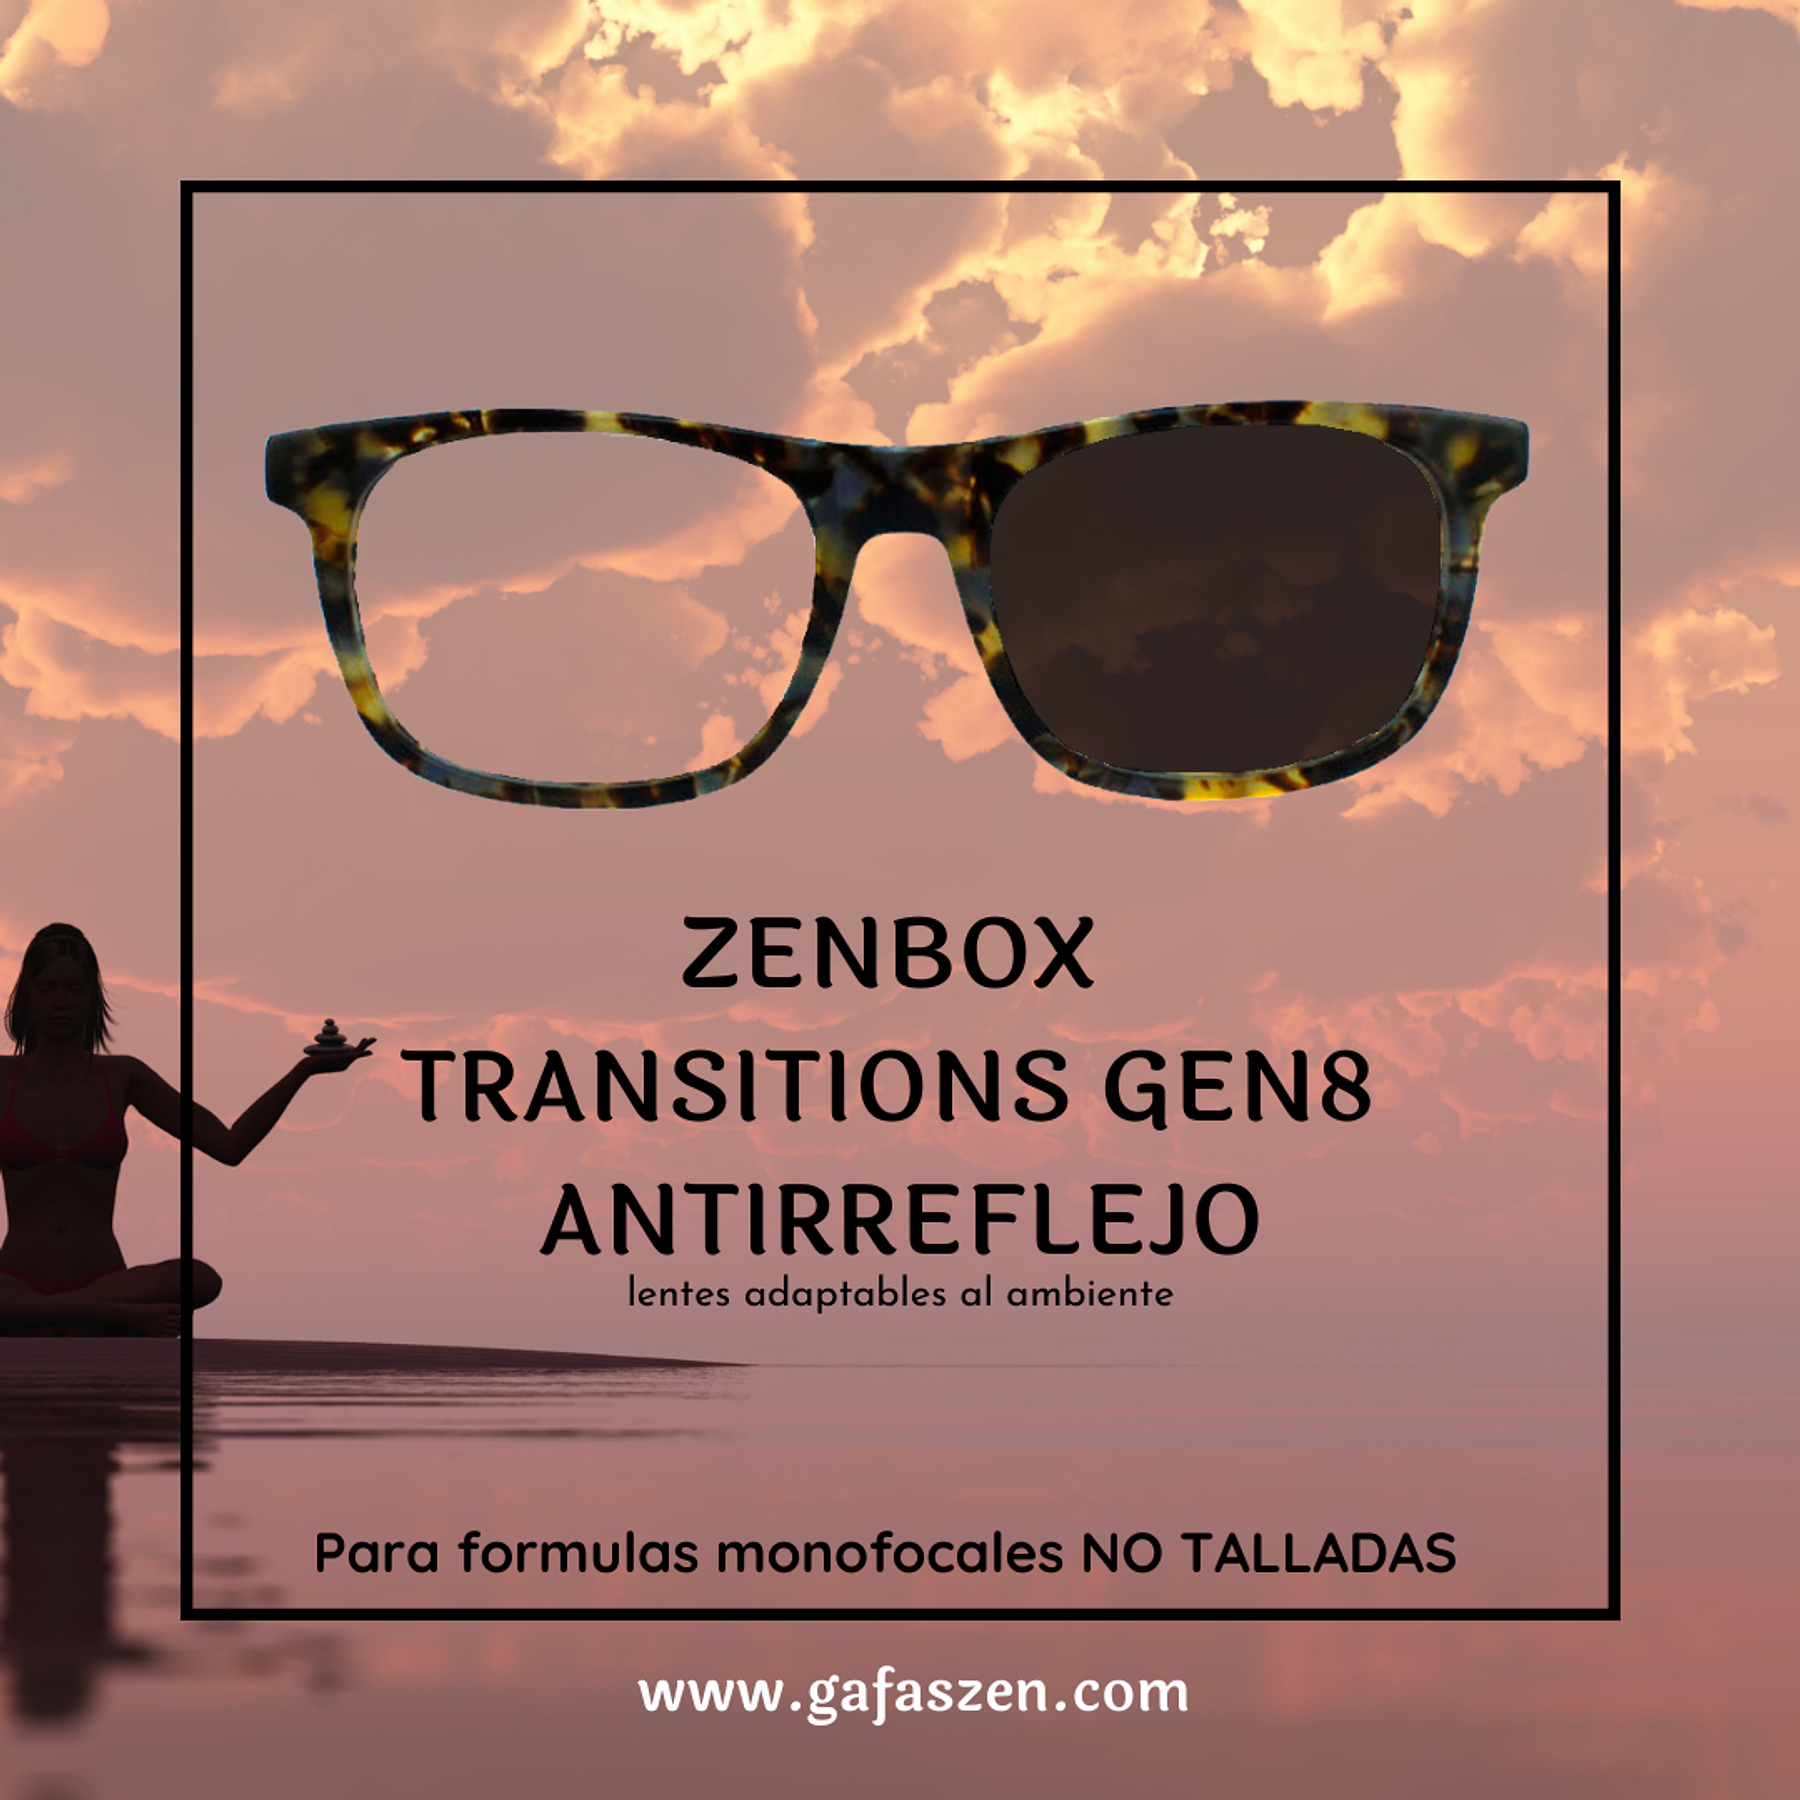 ZENBOX Transitions gen8 + antirreflejo monofocal